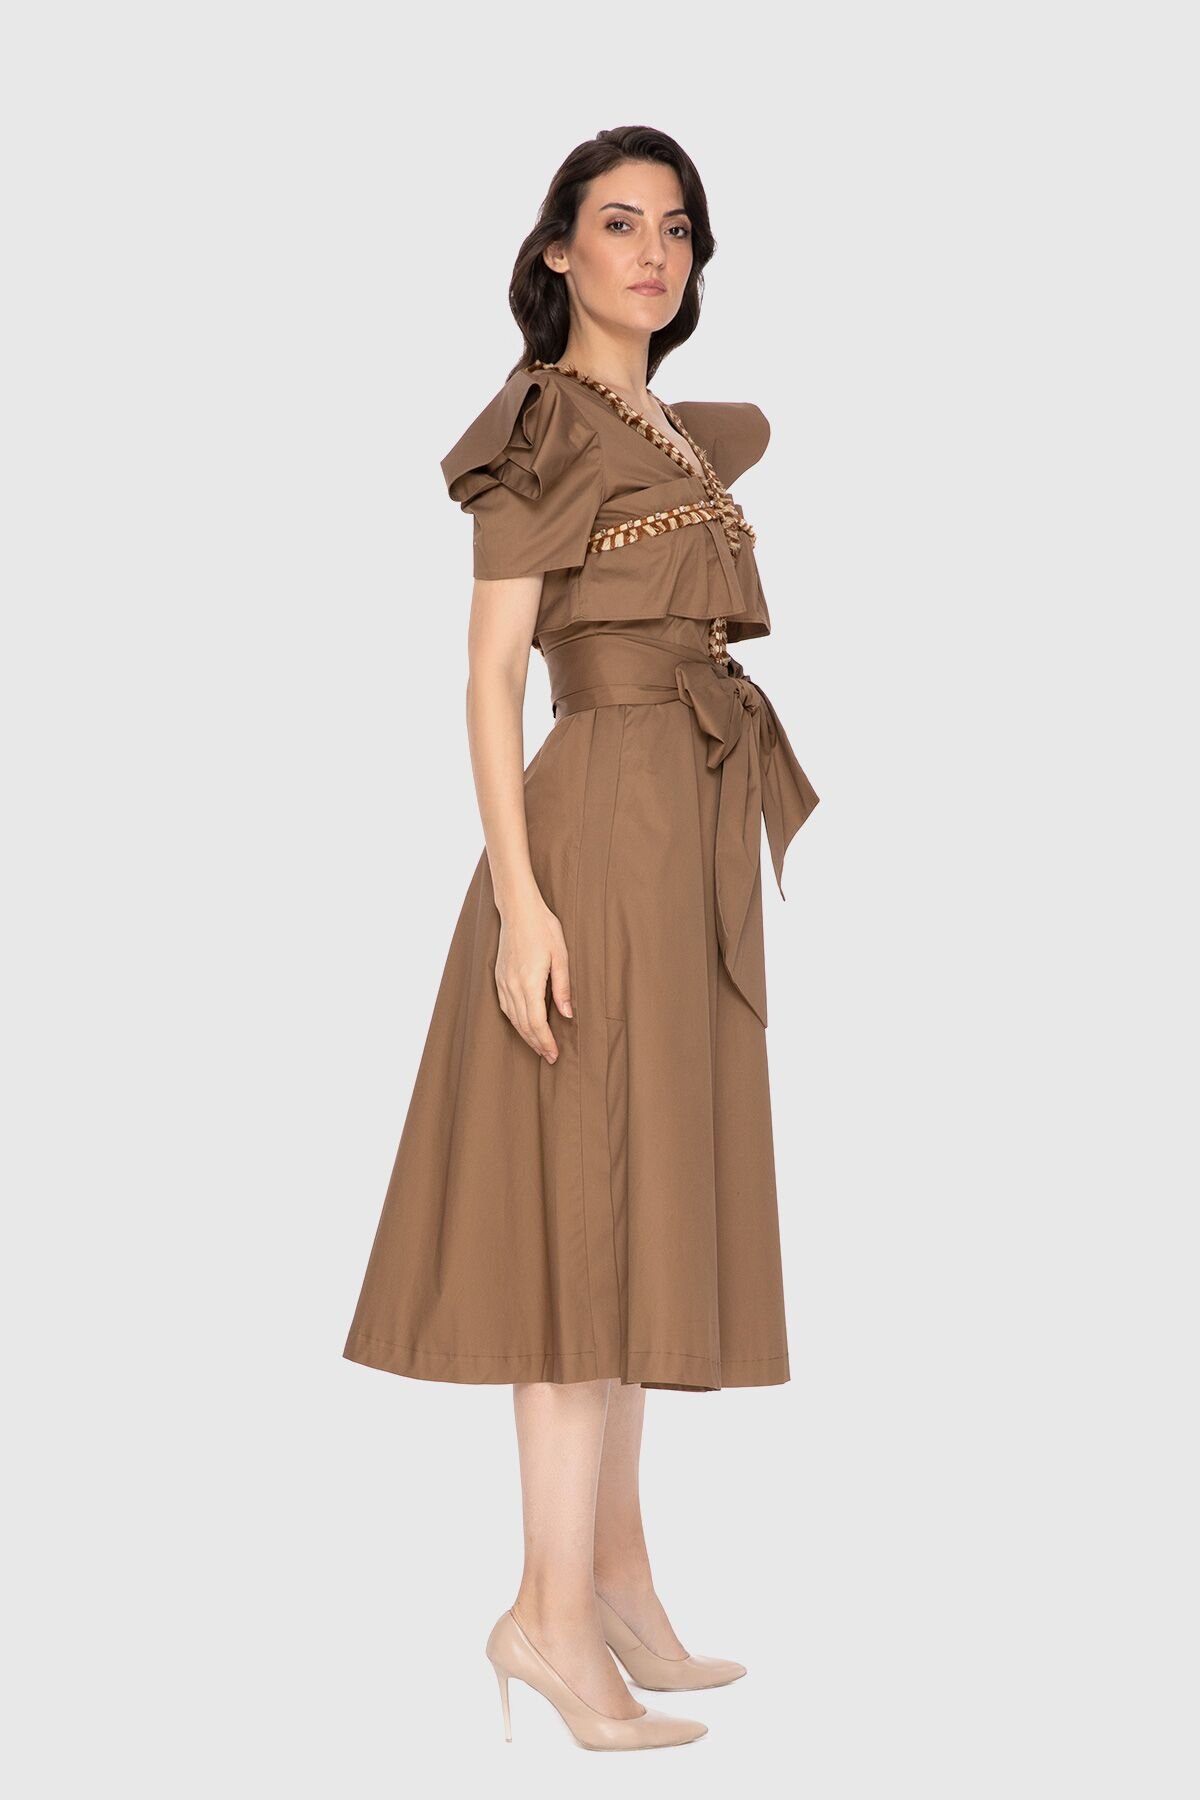 Stripe And Tassel Detail Embroidered Poplin Midi Length Brown Dress